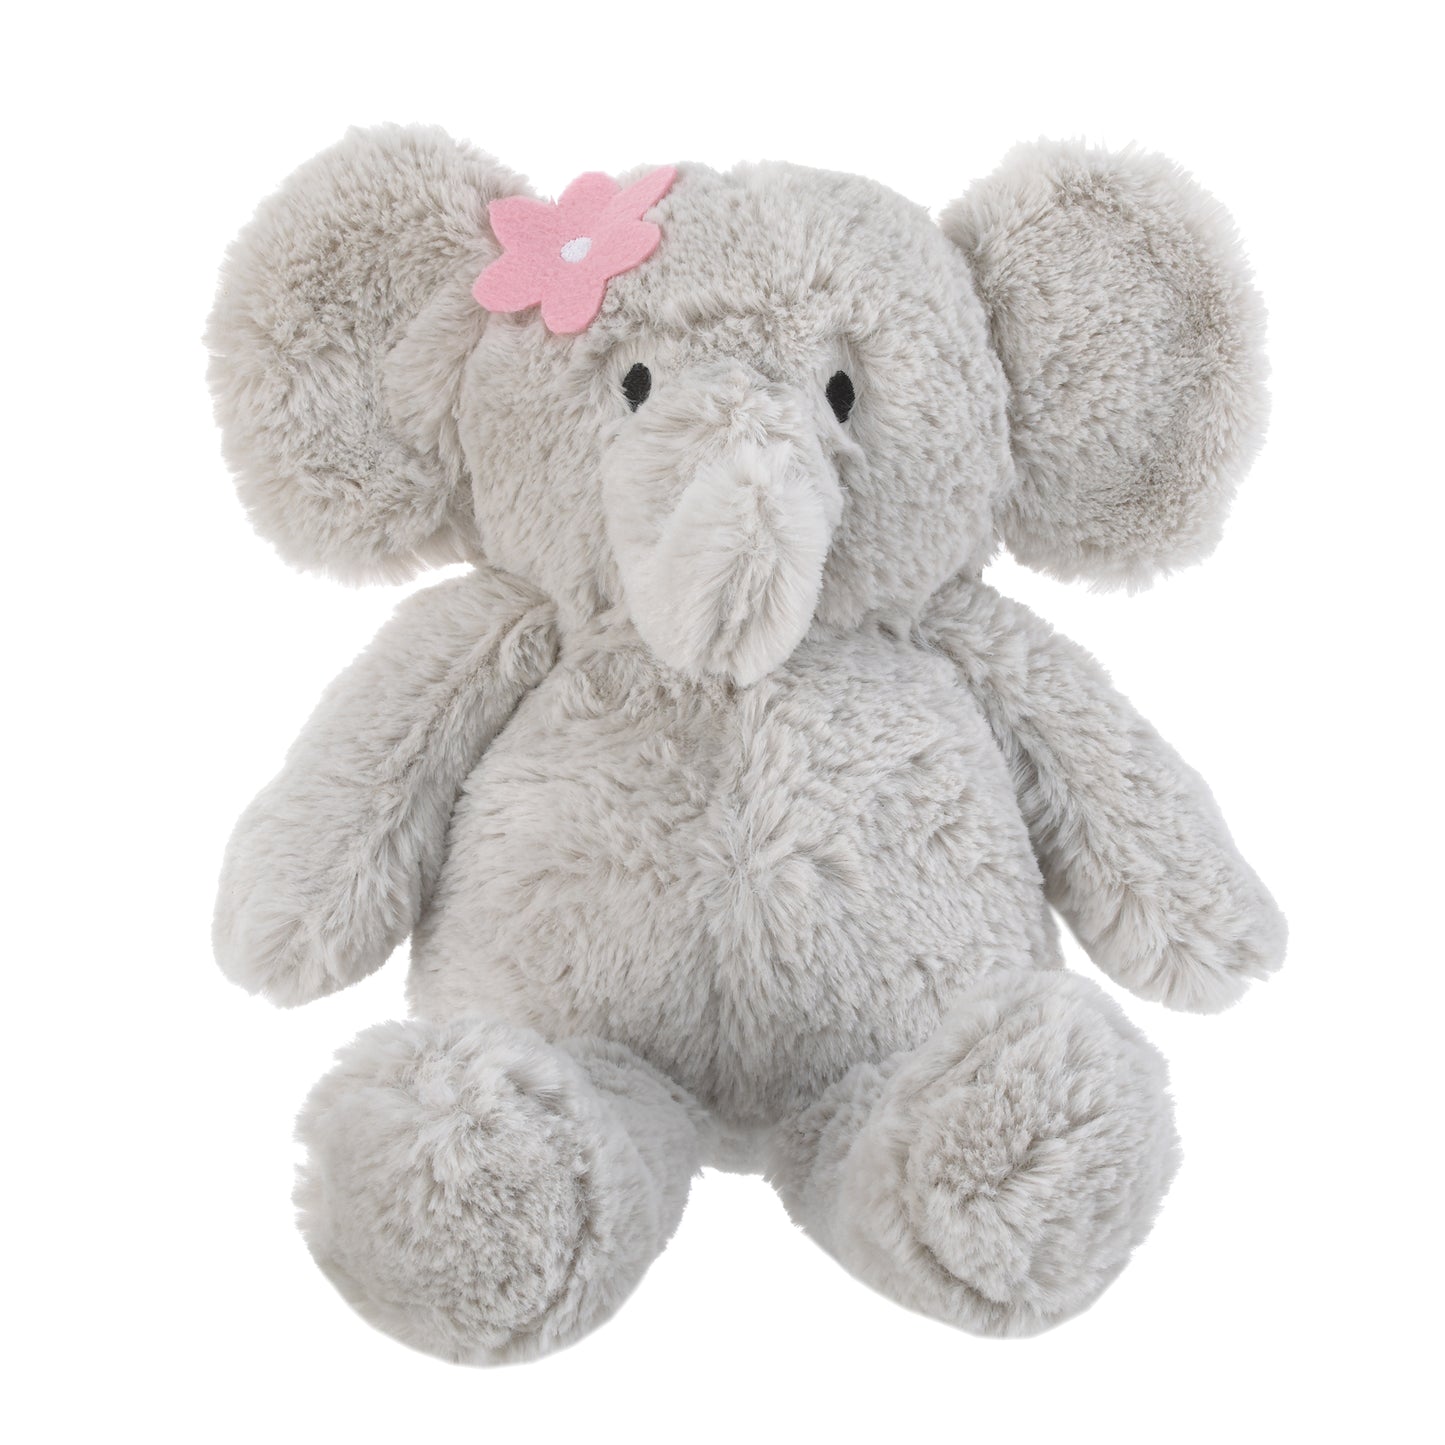 Carter's Floral Elephant Gray Plush Stuffed Animal